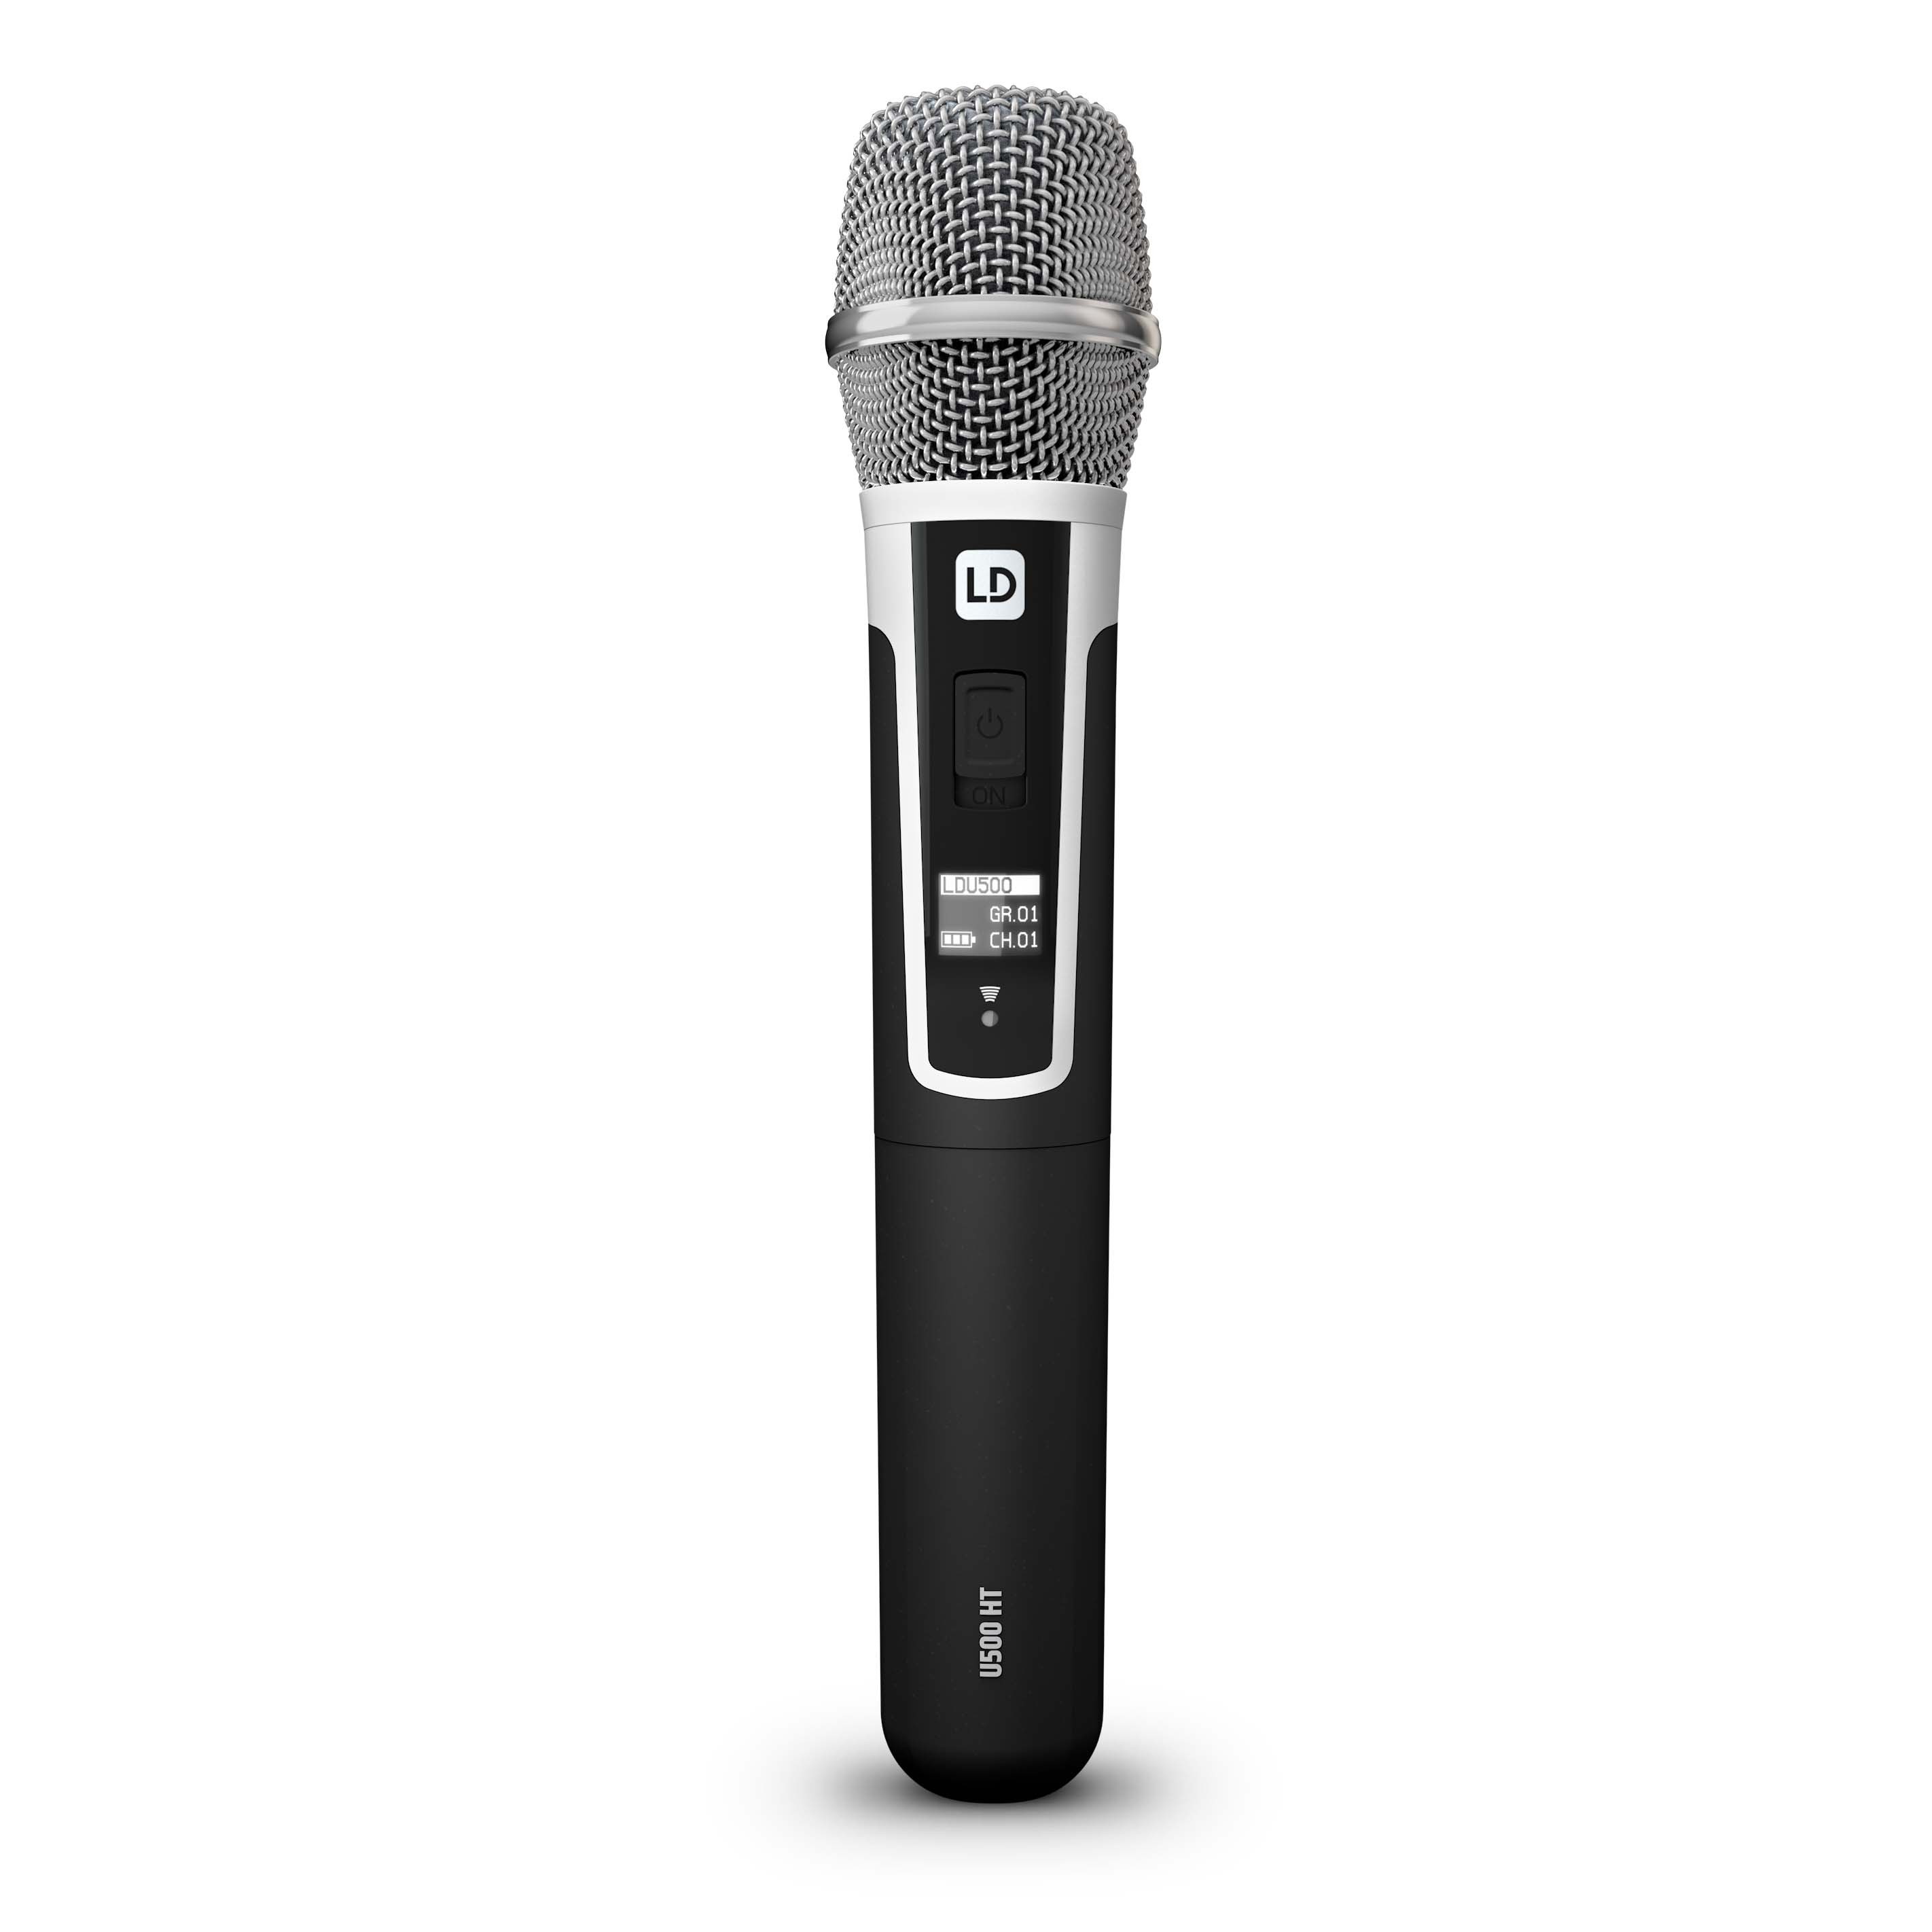 Ld Systems U508 Hhc 2 - Wireless handheld microphone - Variation 5